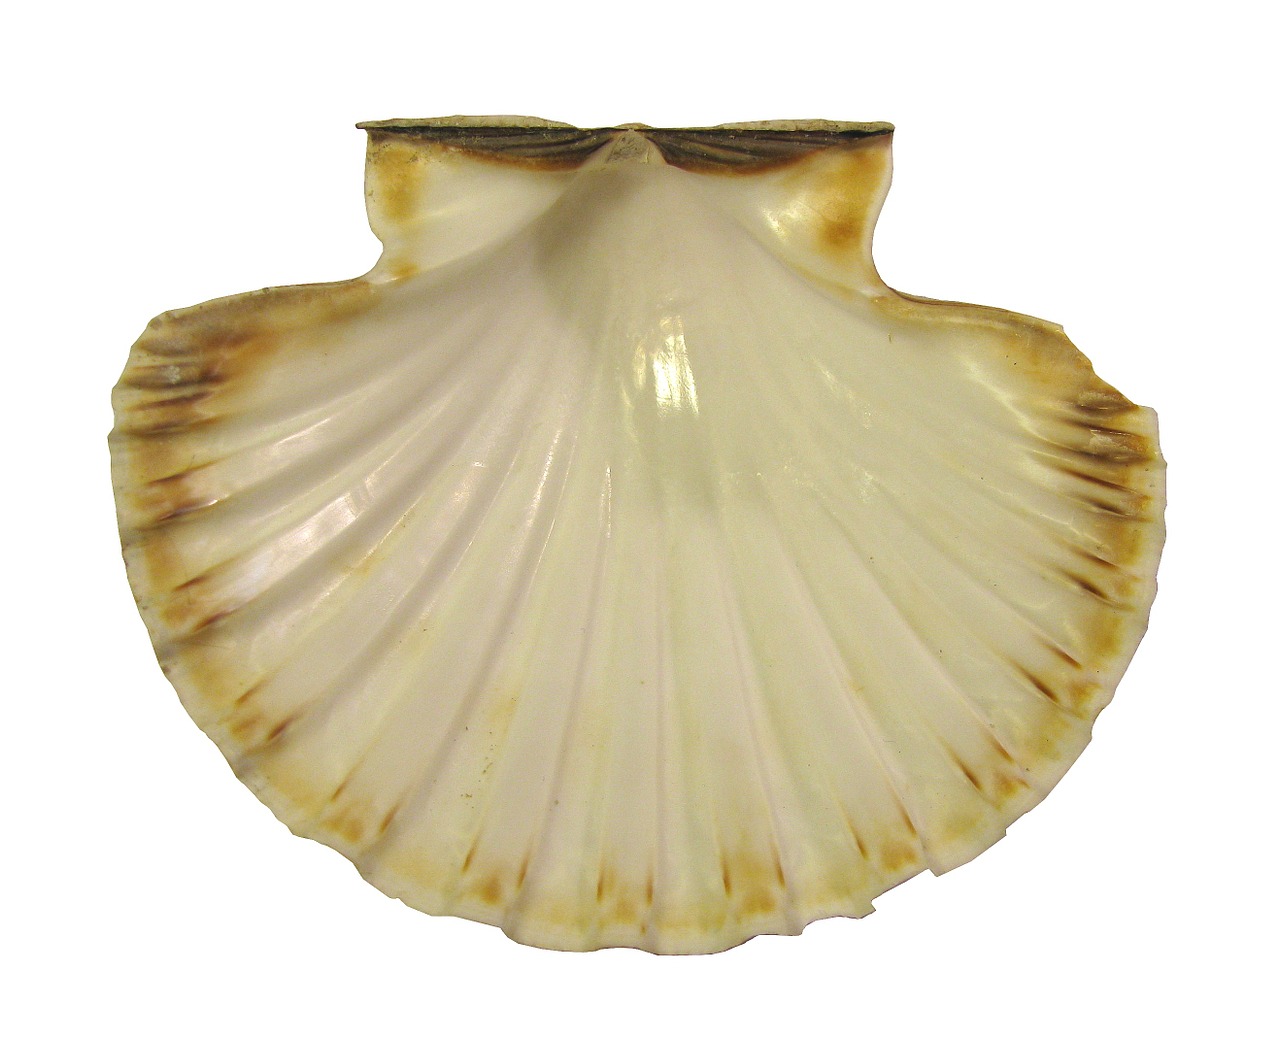 seashell scallop nature free photo